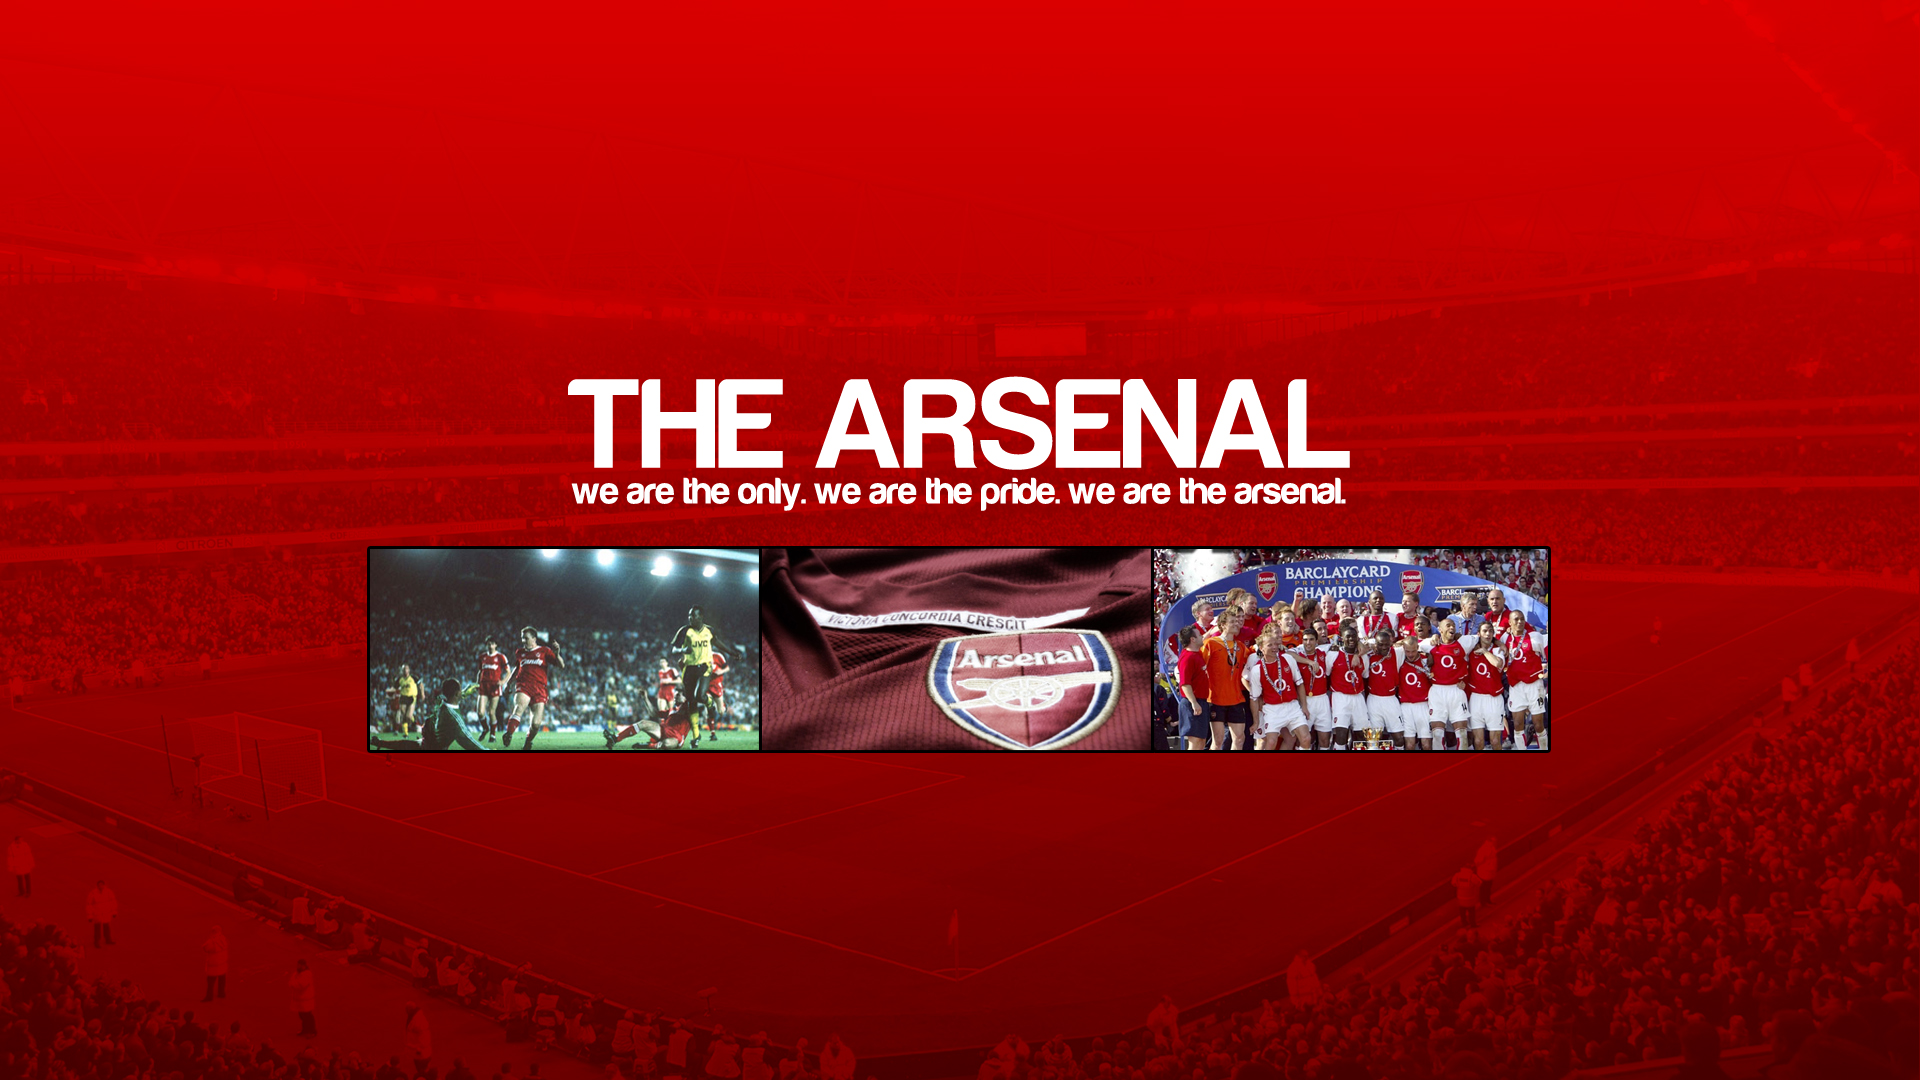 historic, Arsenal FC, Gunners - desktop wallpaper